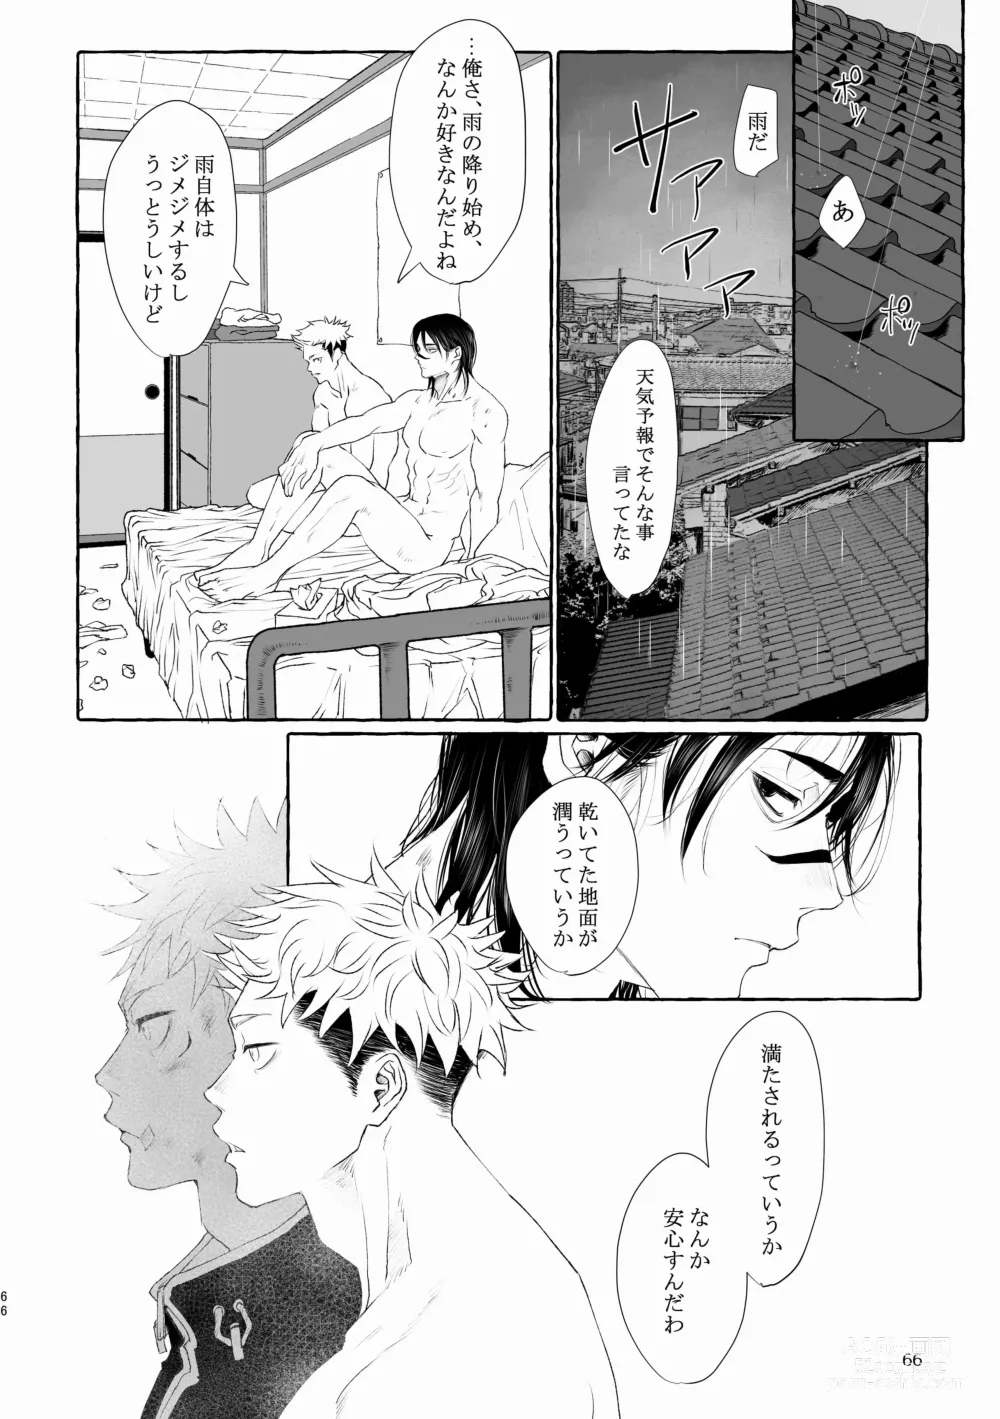 Page 66 of doujinshi Inryoku no Petrichor